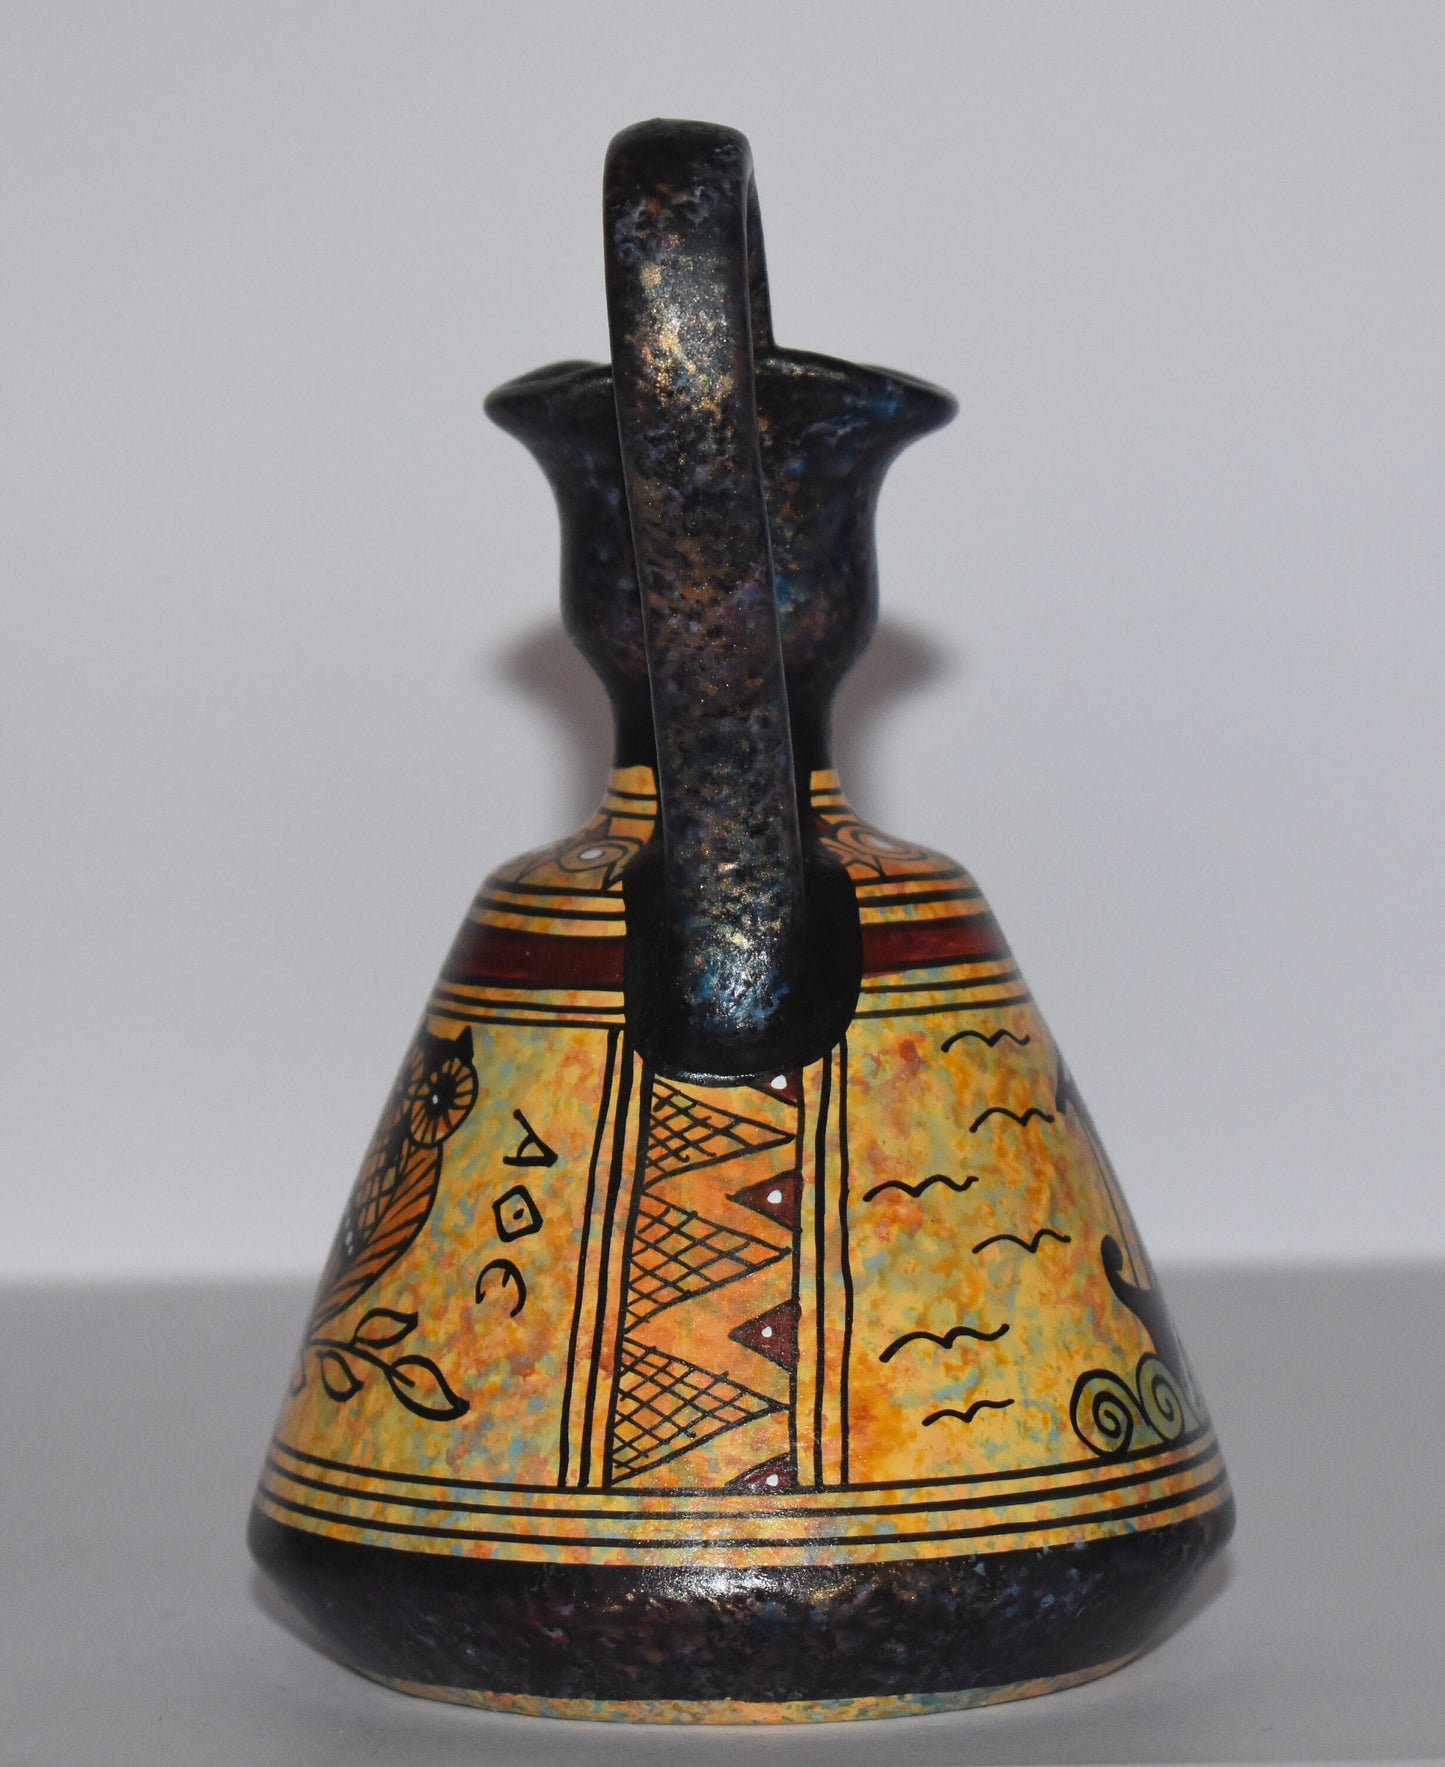 Ancient Greek vase -  athenian owl and ship - Miniature Ceramic piece - Geometric Period - Handmade in Greece